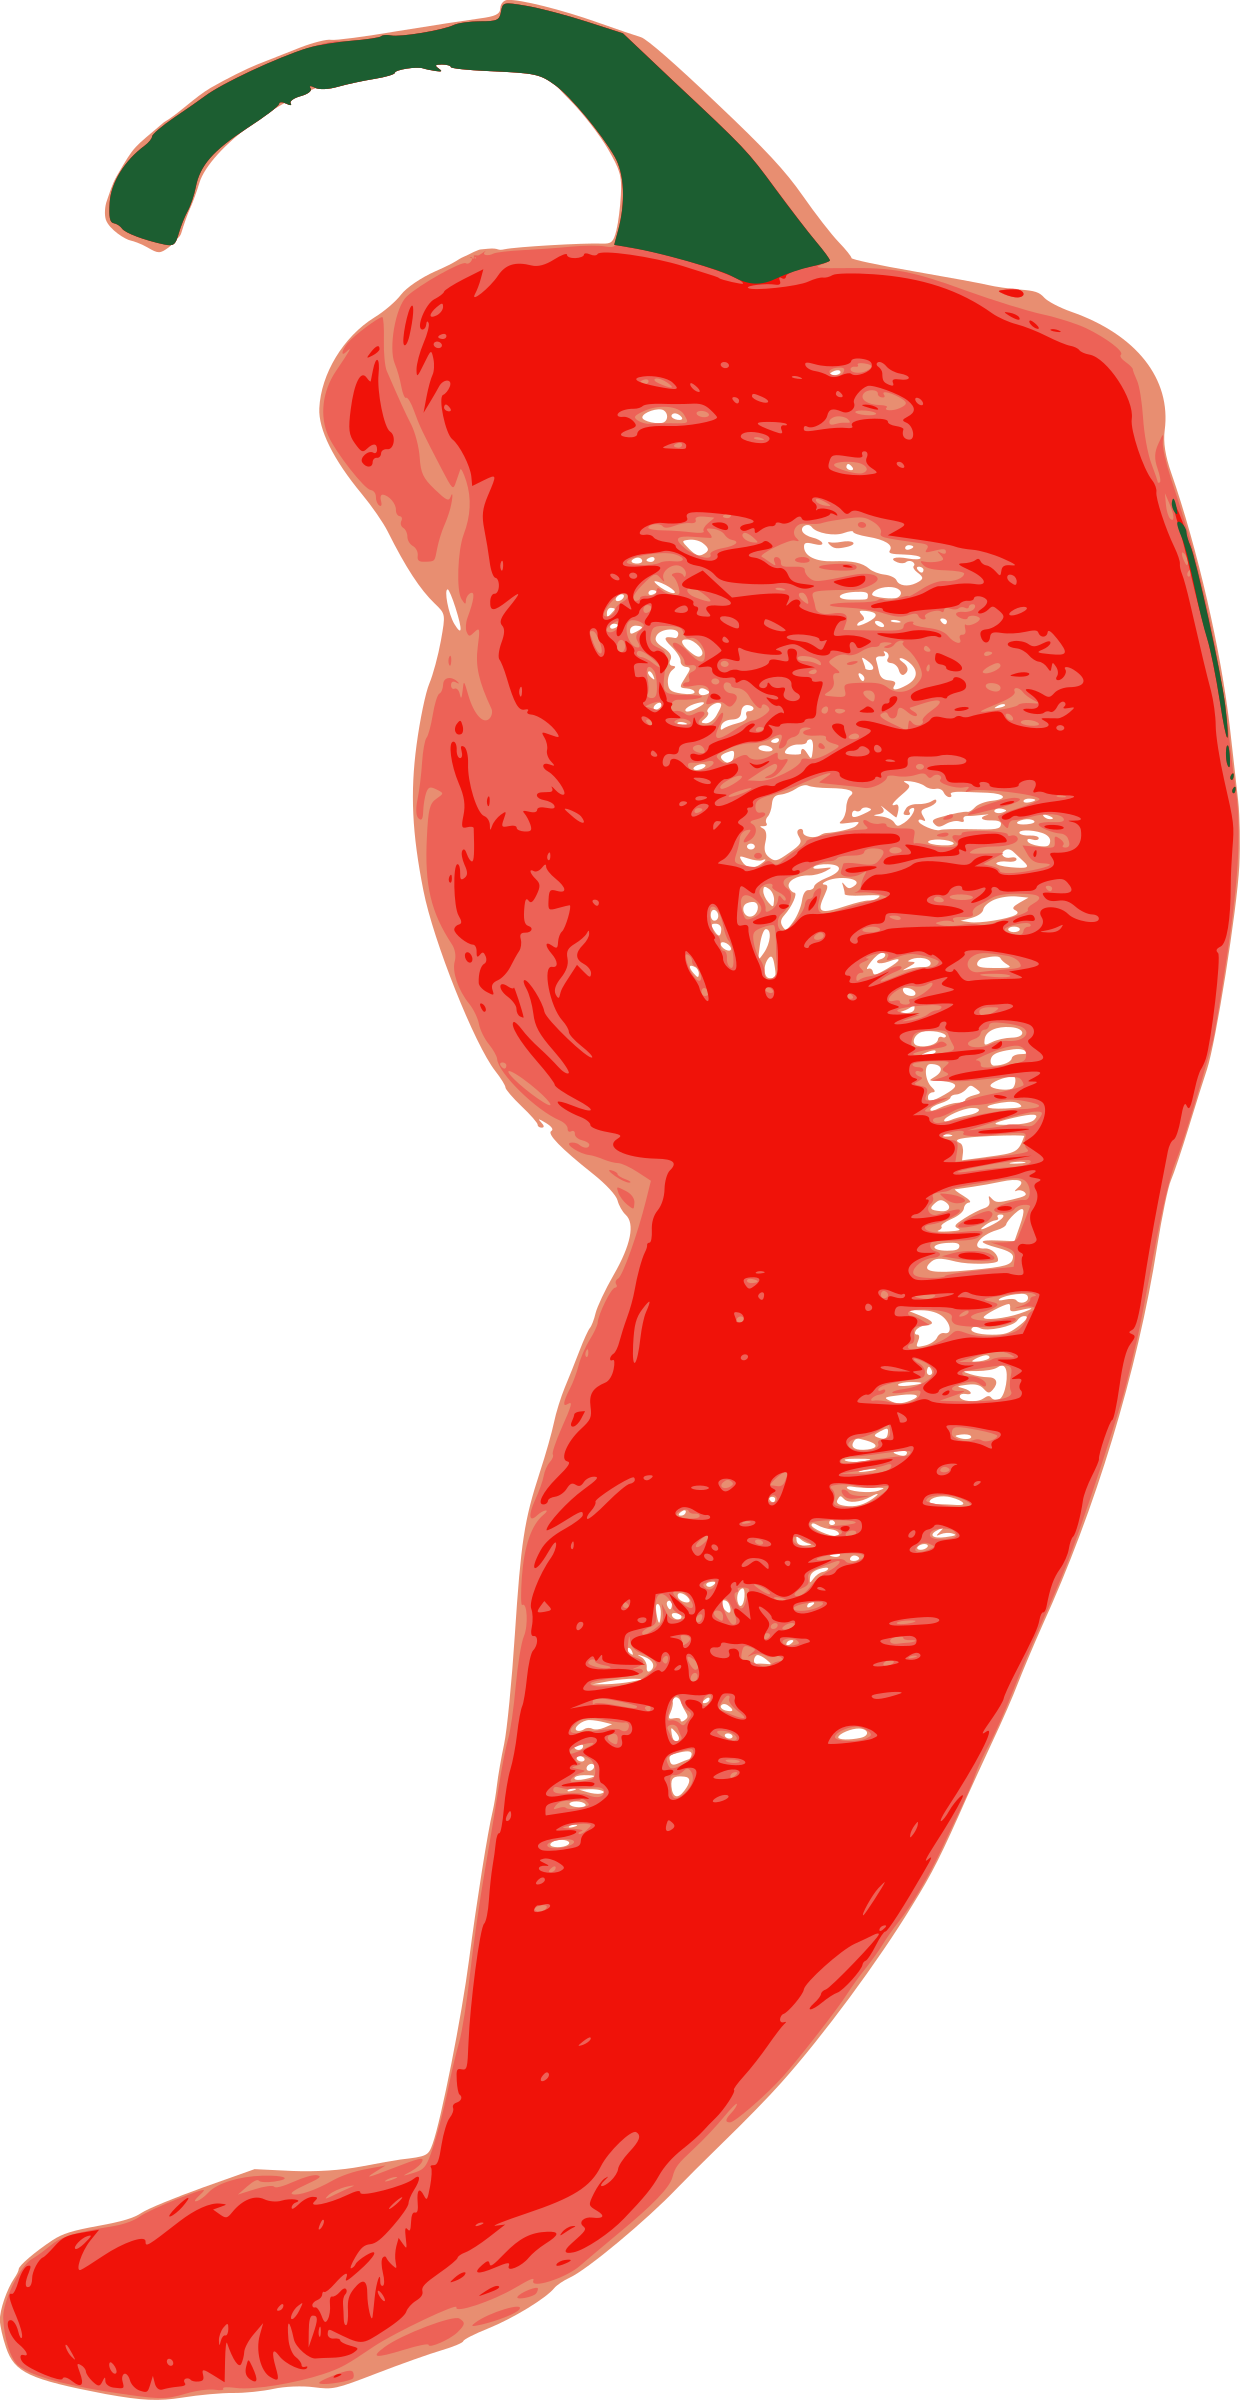 Cayenne Red Chili Pepper